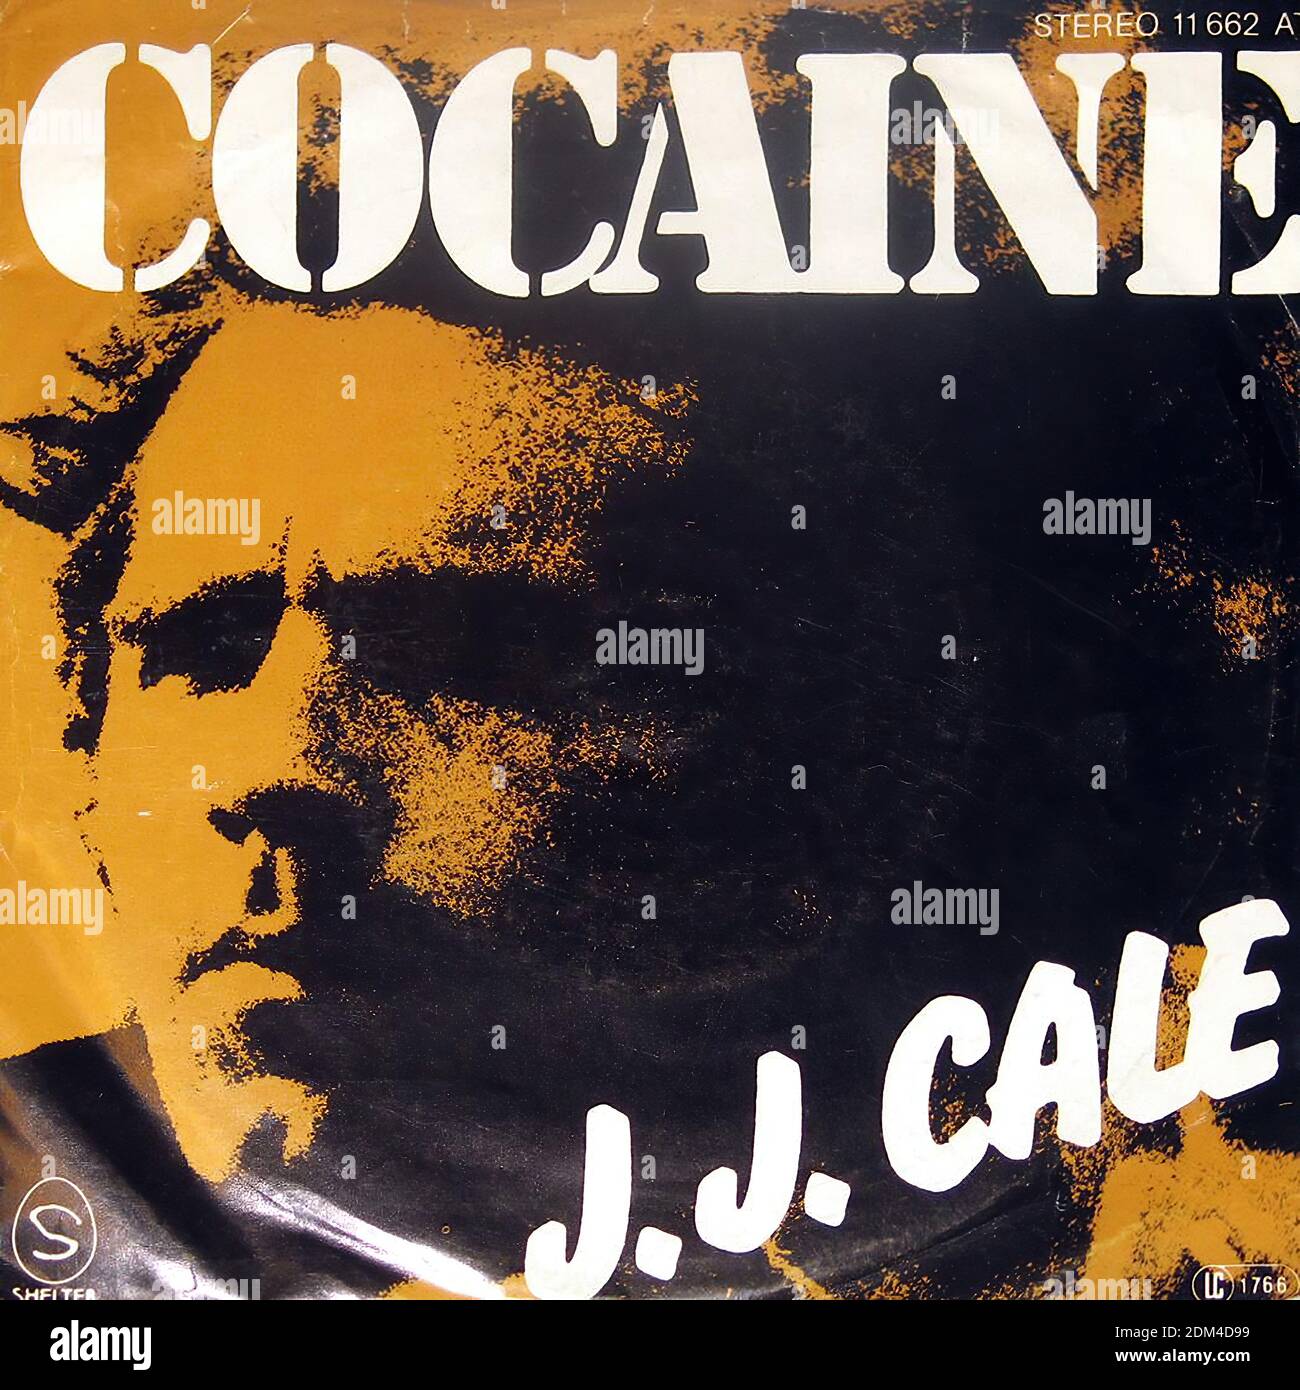 J.J. Cale Cocaine   Hey Baby 7  Single - Vintage Vinyl Record Cover Stock Photo